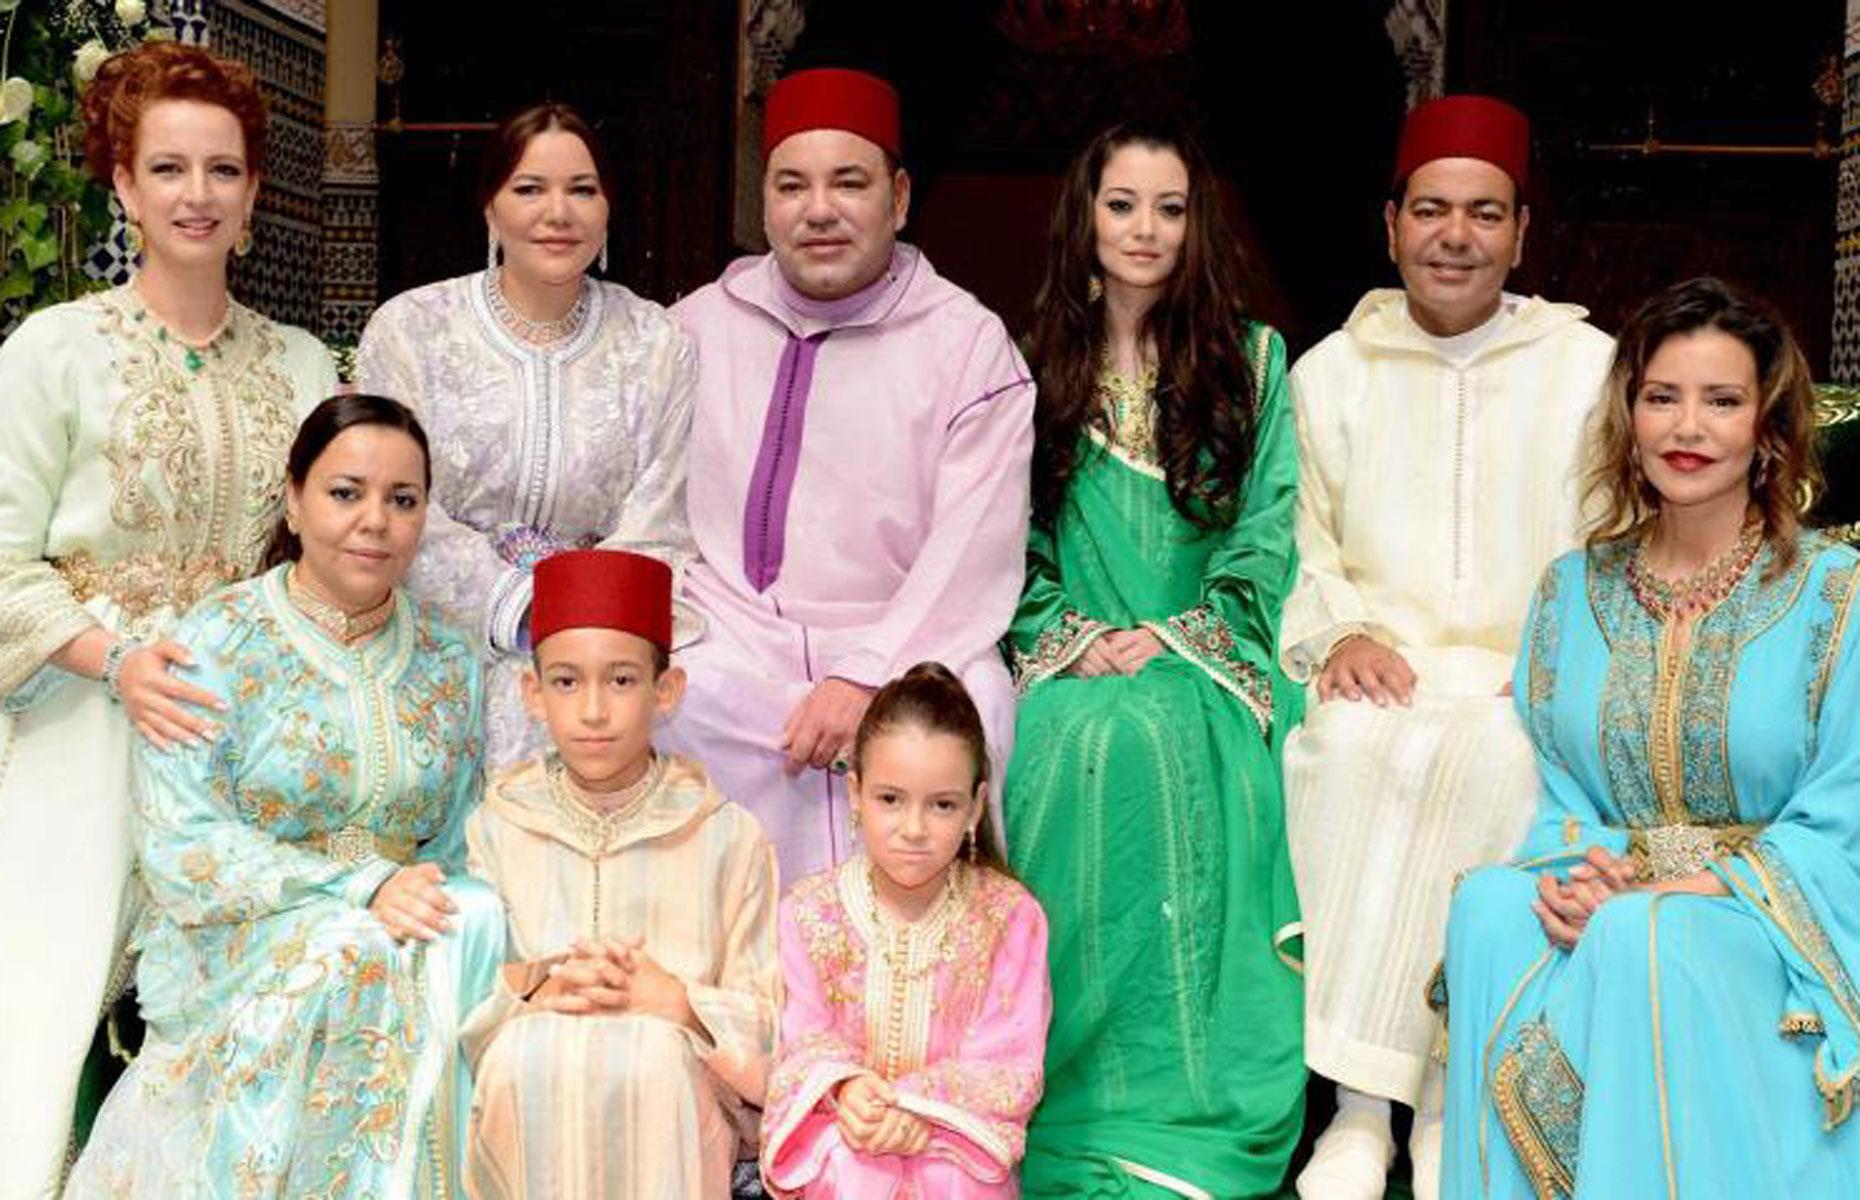 9. Morocco's royal family: $8.2 billion (£6bn)